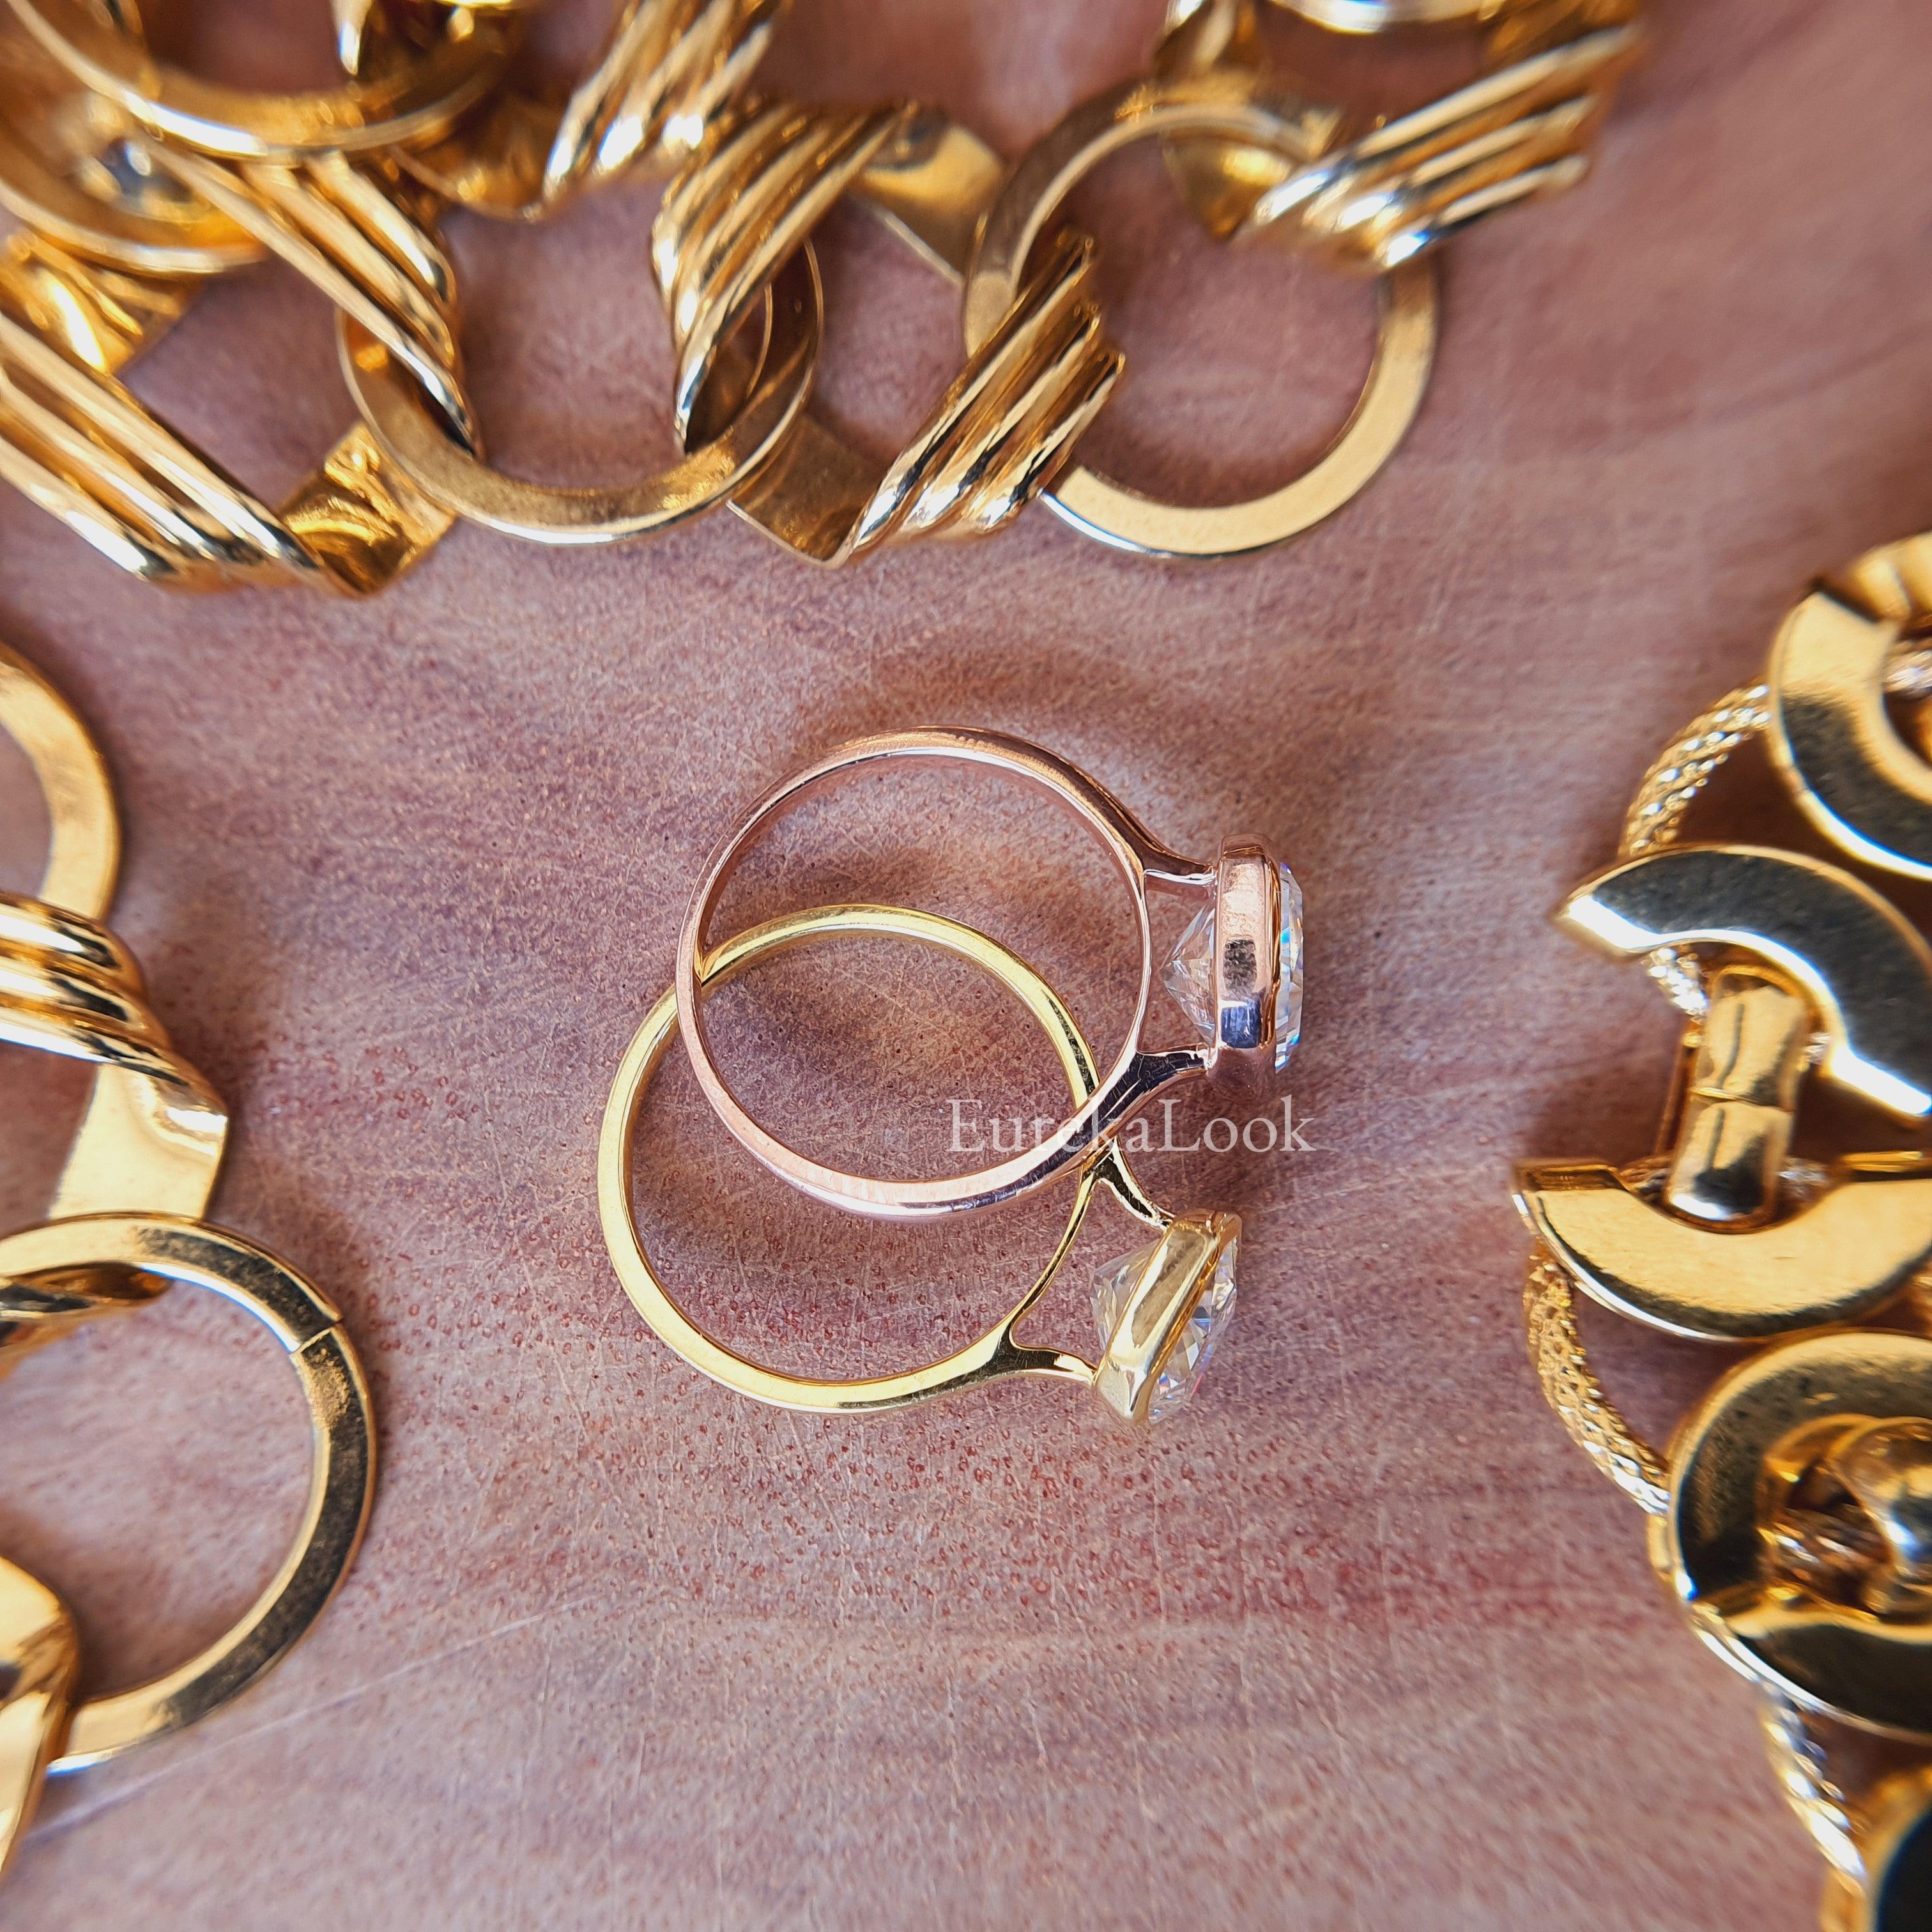 Radiant Cut Solitaire Moissanite Wedding Ring - Eurekalook